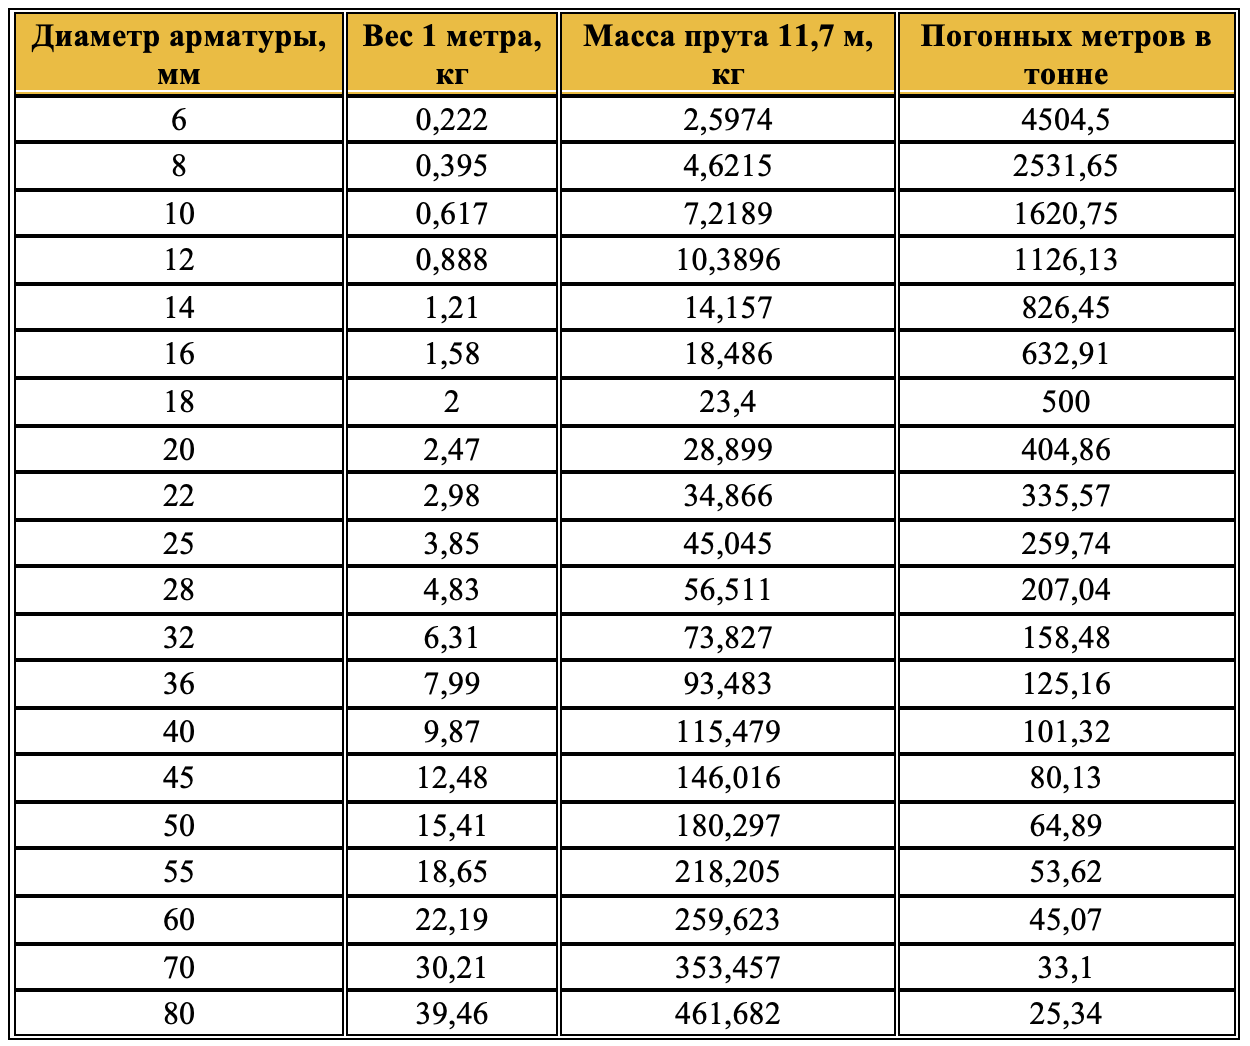 Арматура 12 мм вес 1 метра - таблица для расчета и характеристики